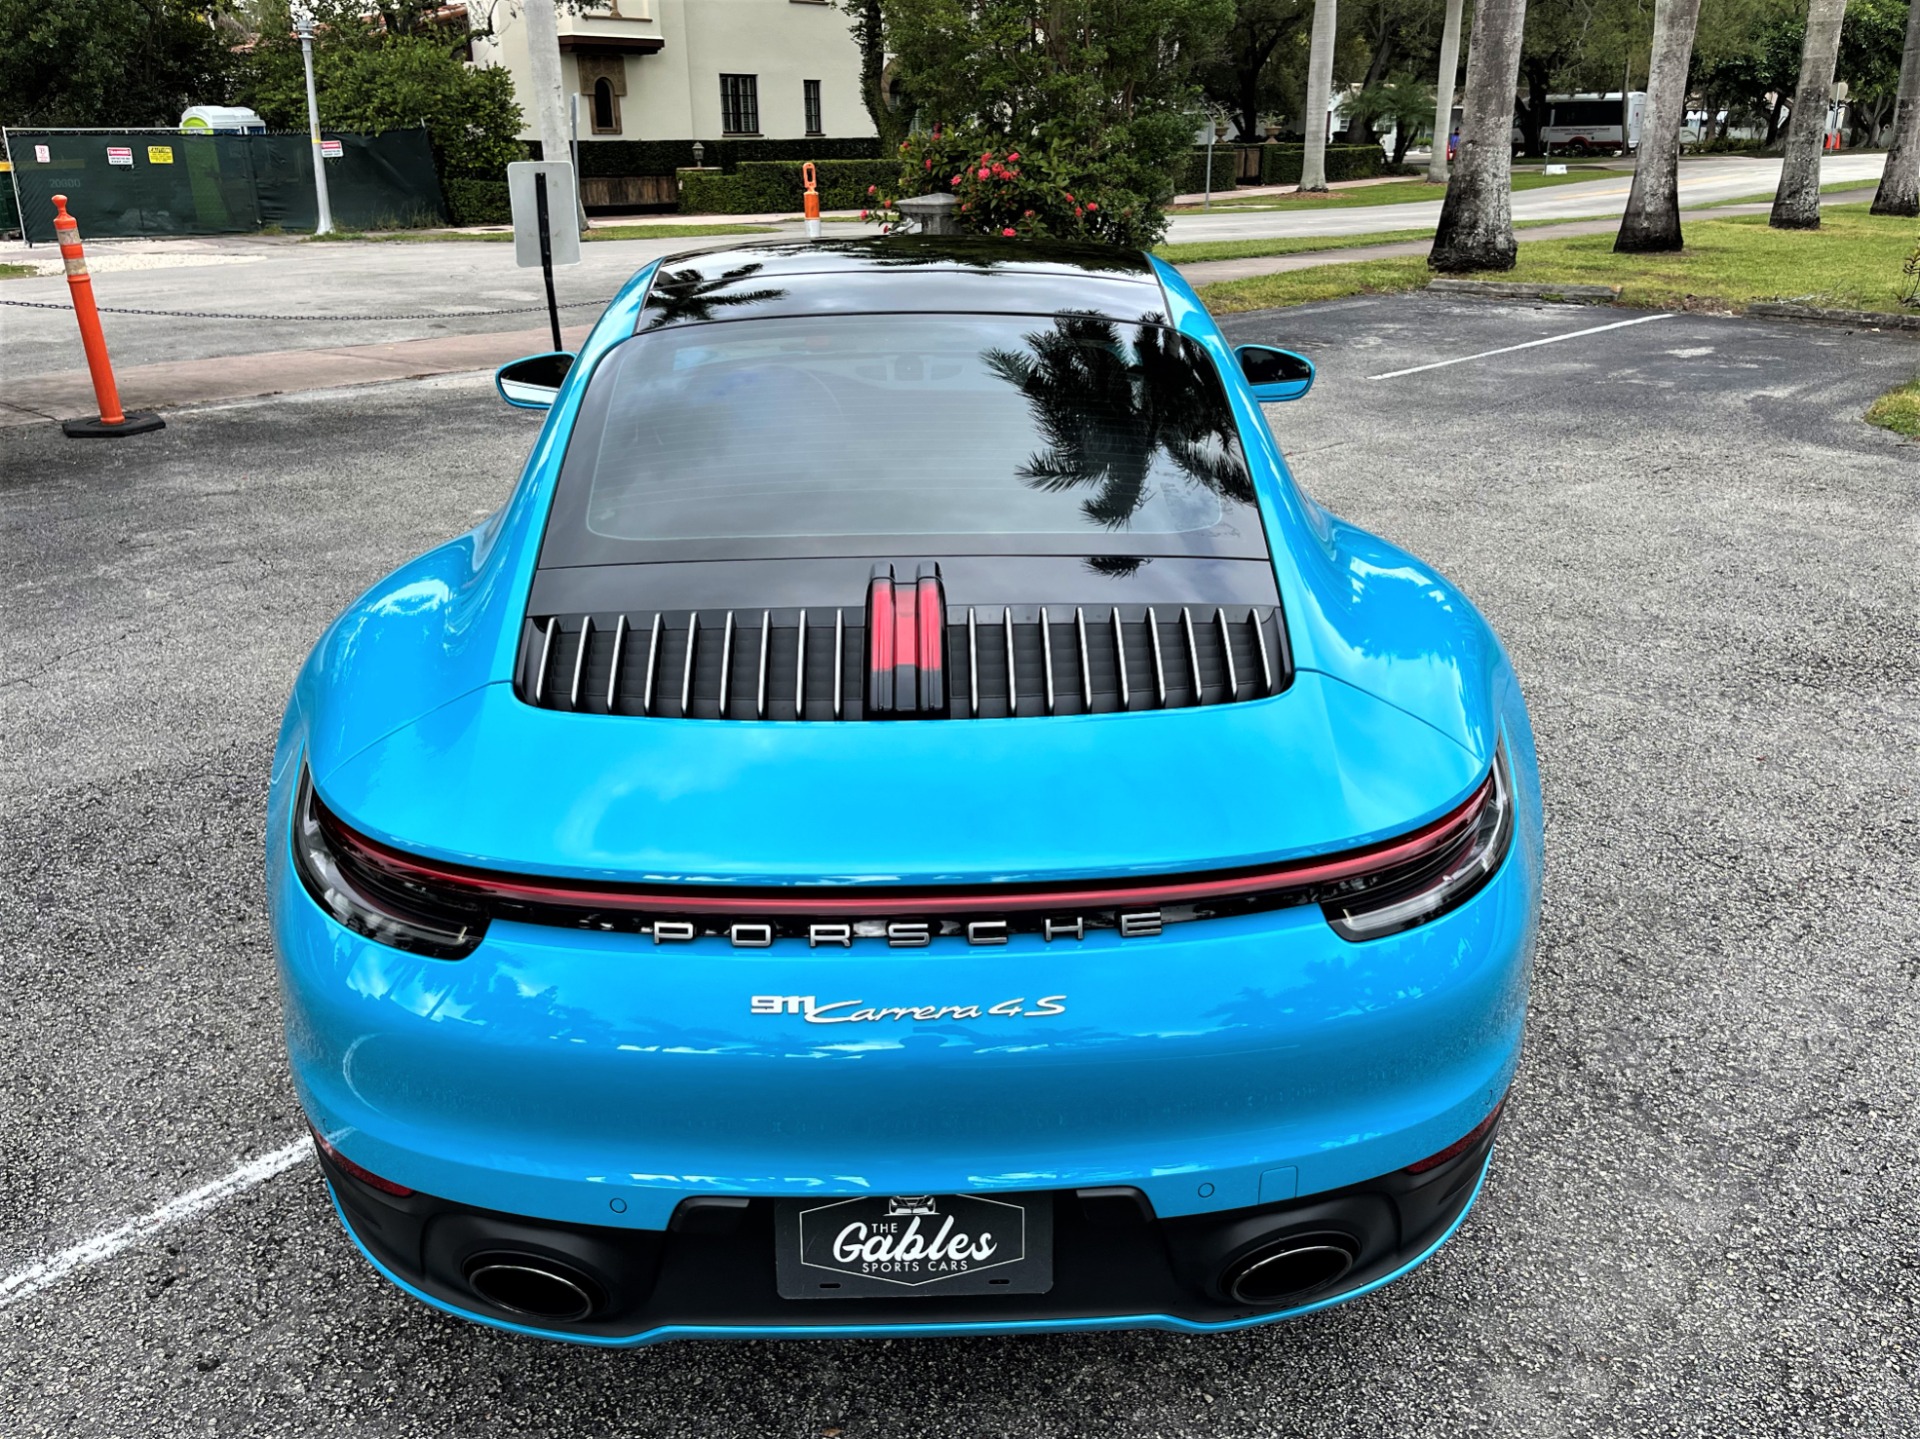 Used 2020 Porsche 911 Carrera 4S for sale $136,850 at The Gables Sports Cars in Miami FL 33146 4